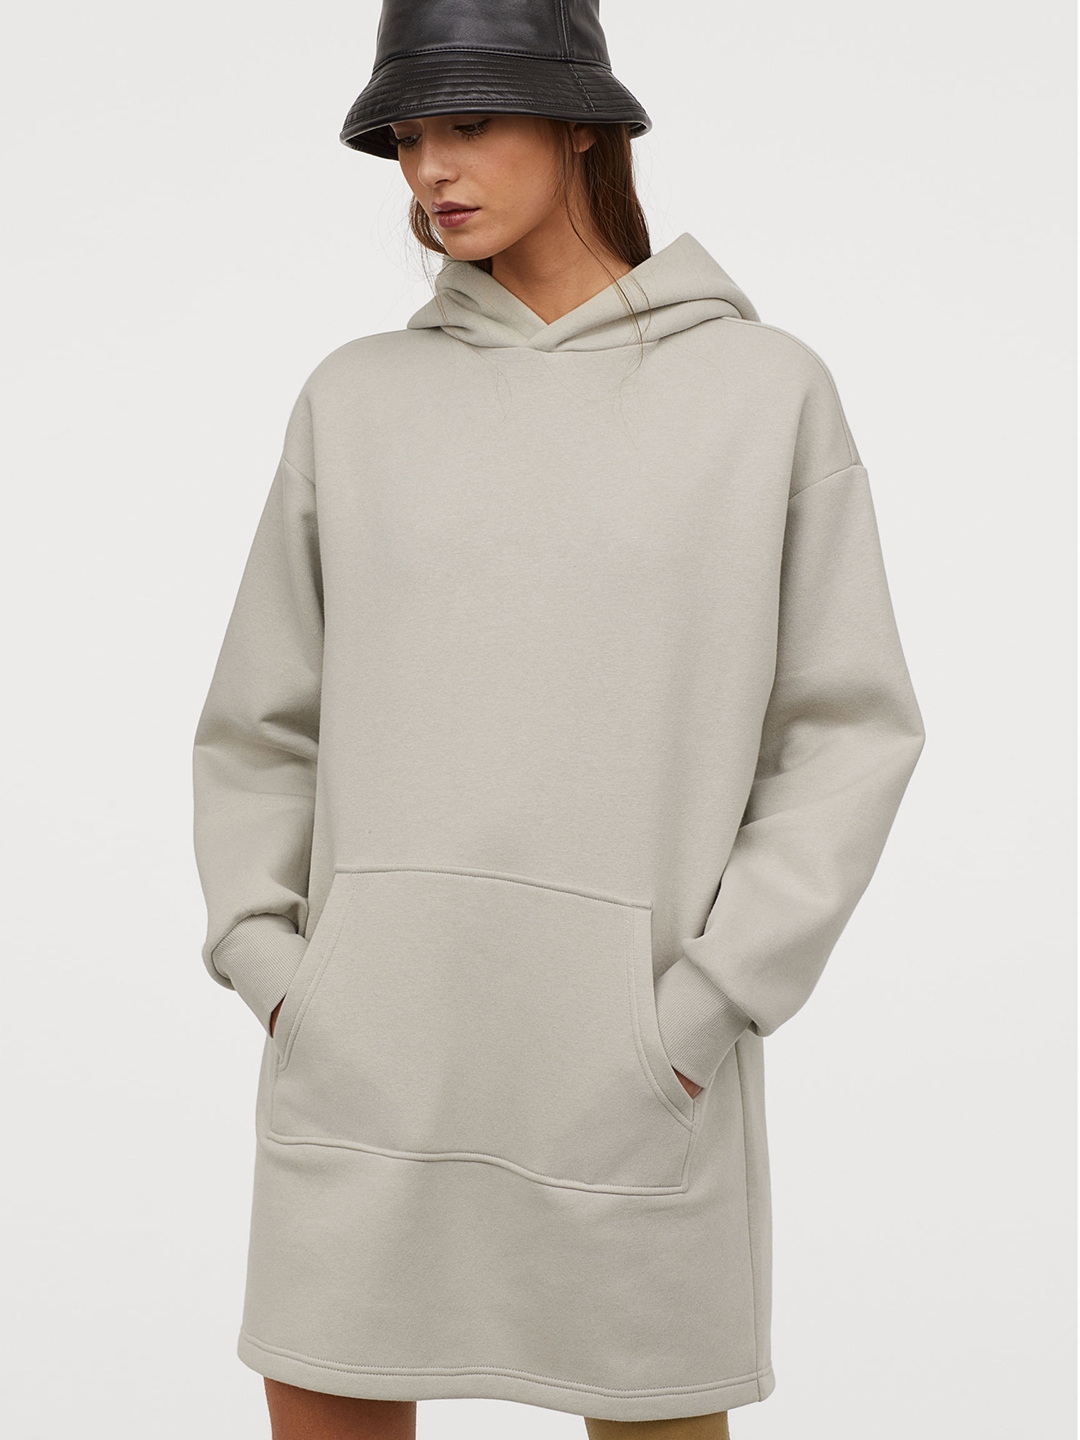 Buy H☀M Women Grey Hooded Sweatshirt ...